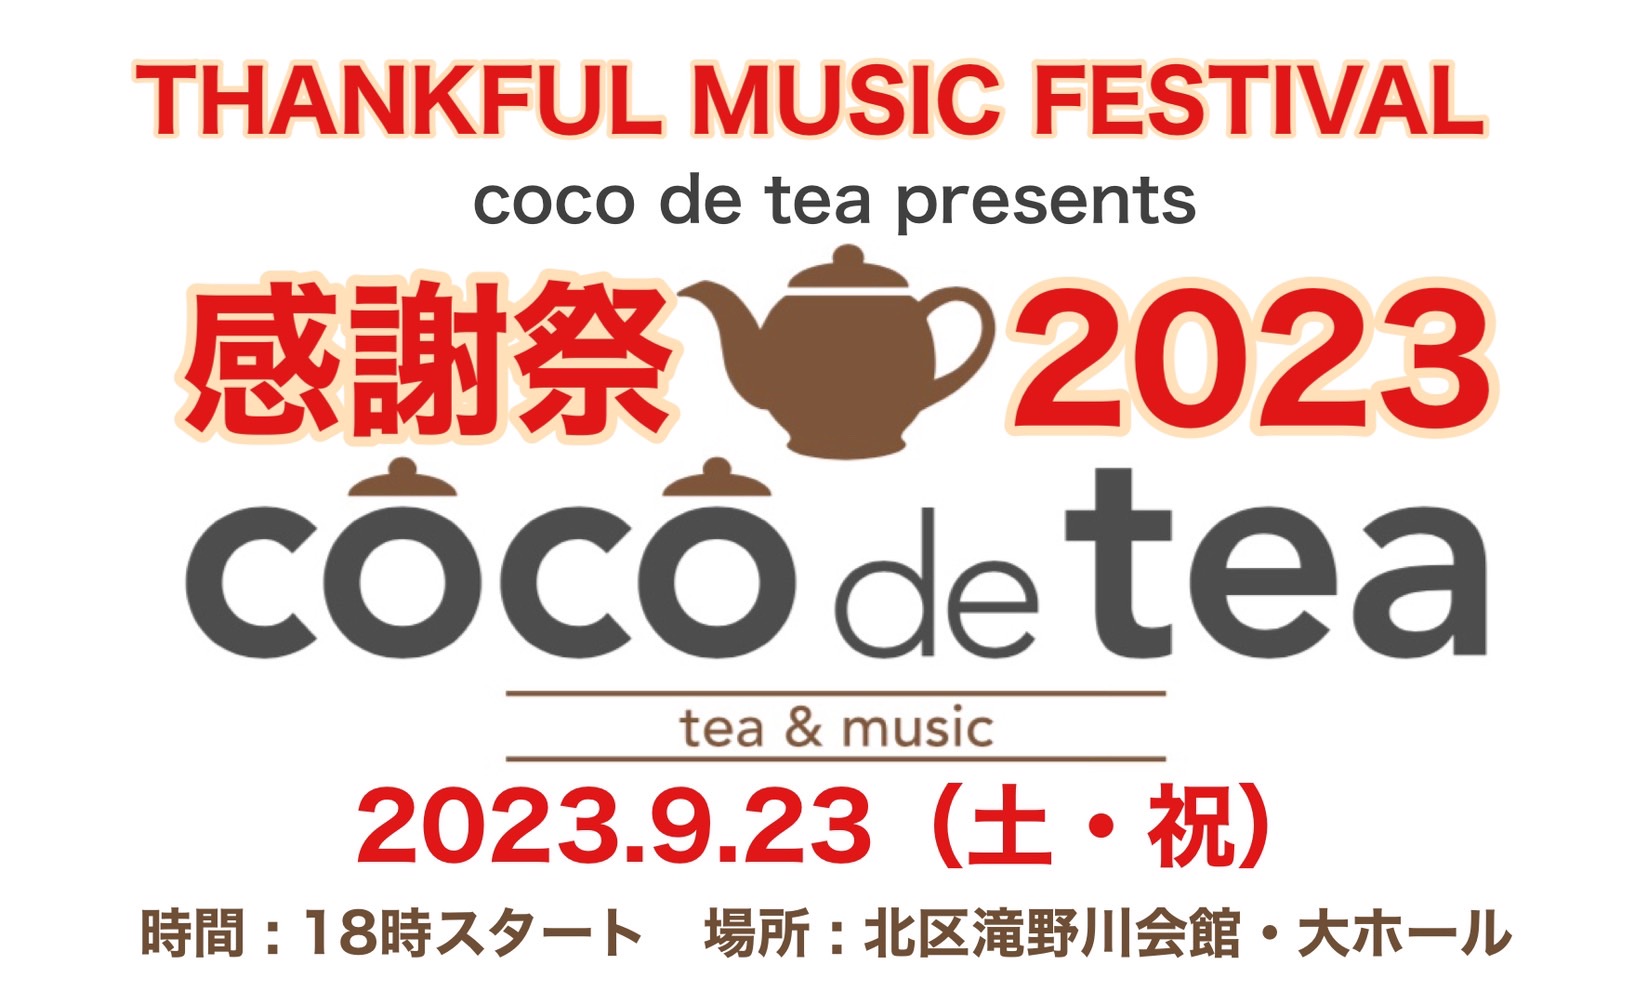 coco de tea presents 『THANKFUL MUSIC FESTIVAL 感謝祭2023』